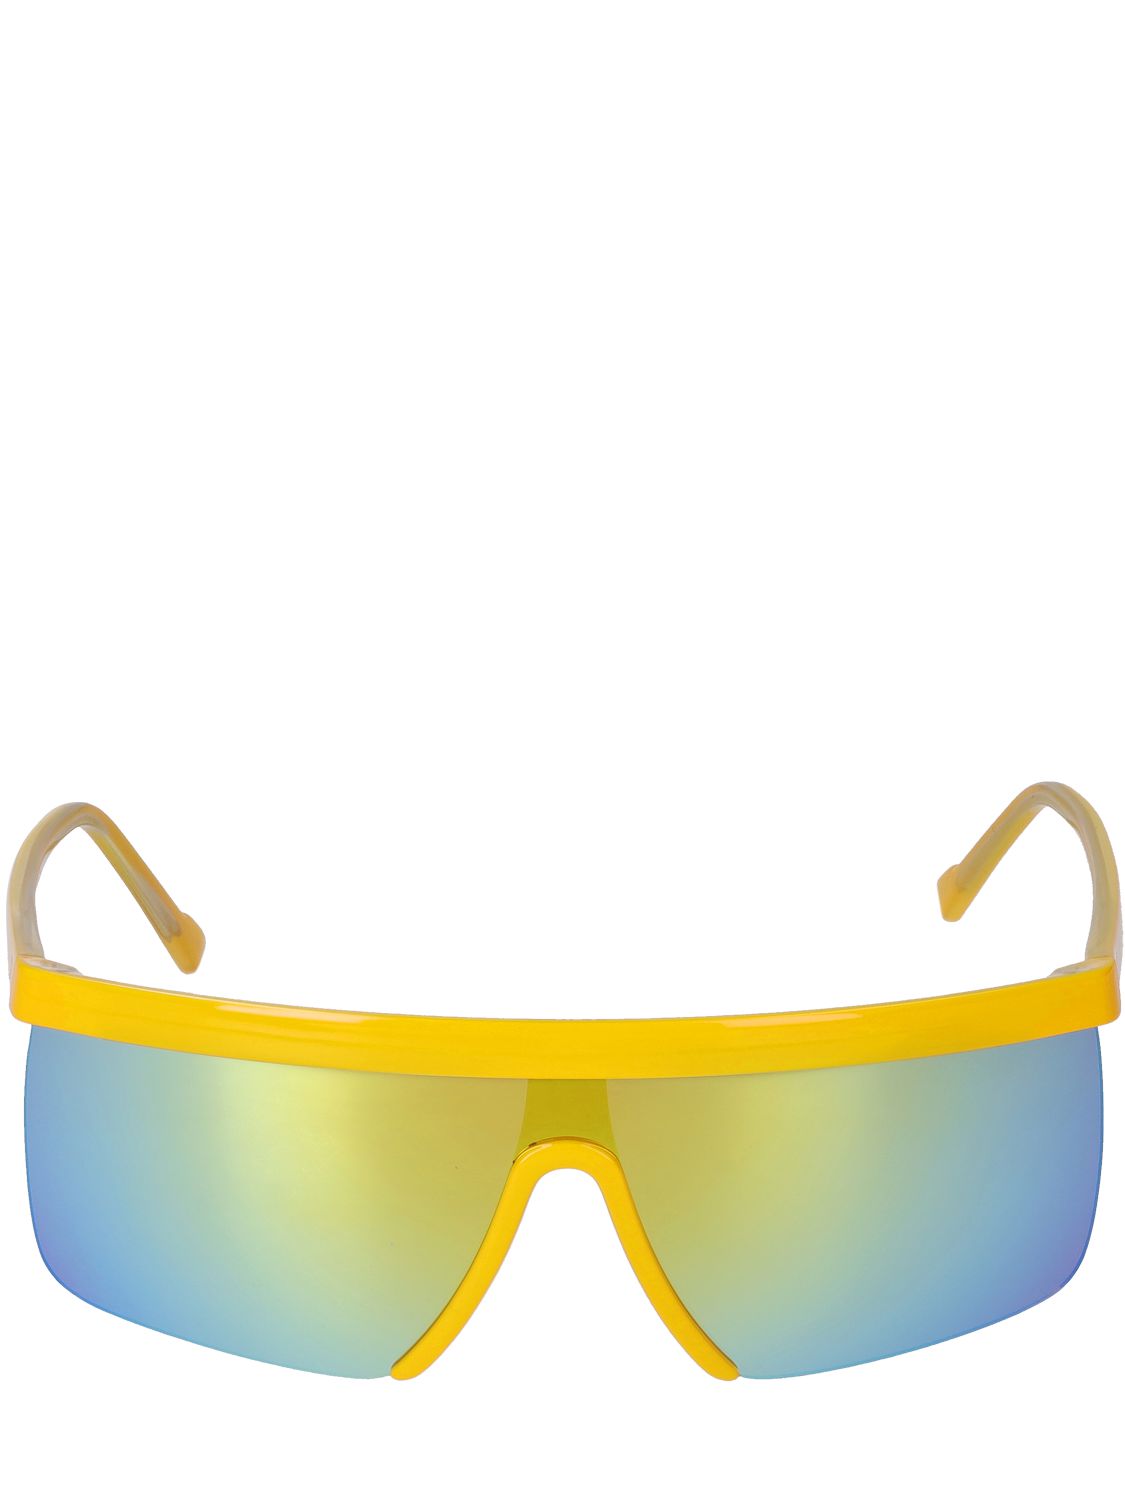 Mask Acetate Sunglasses W/ Mirror Lens